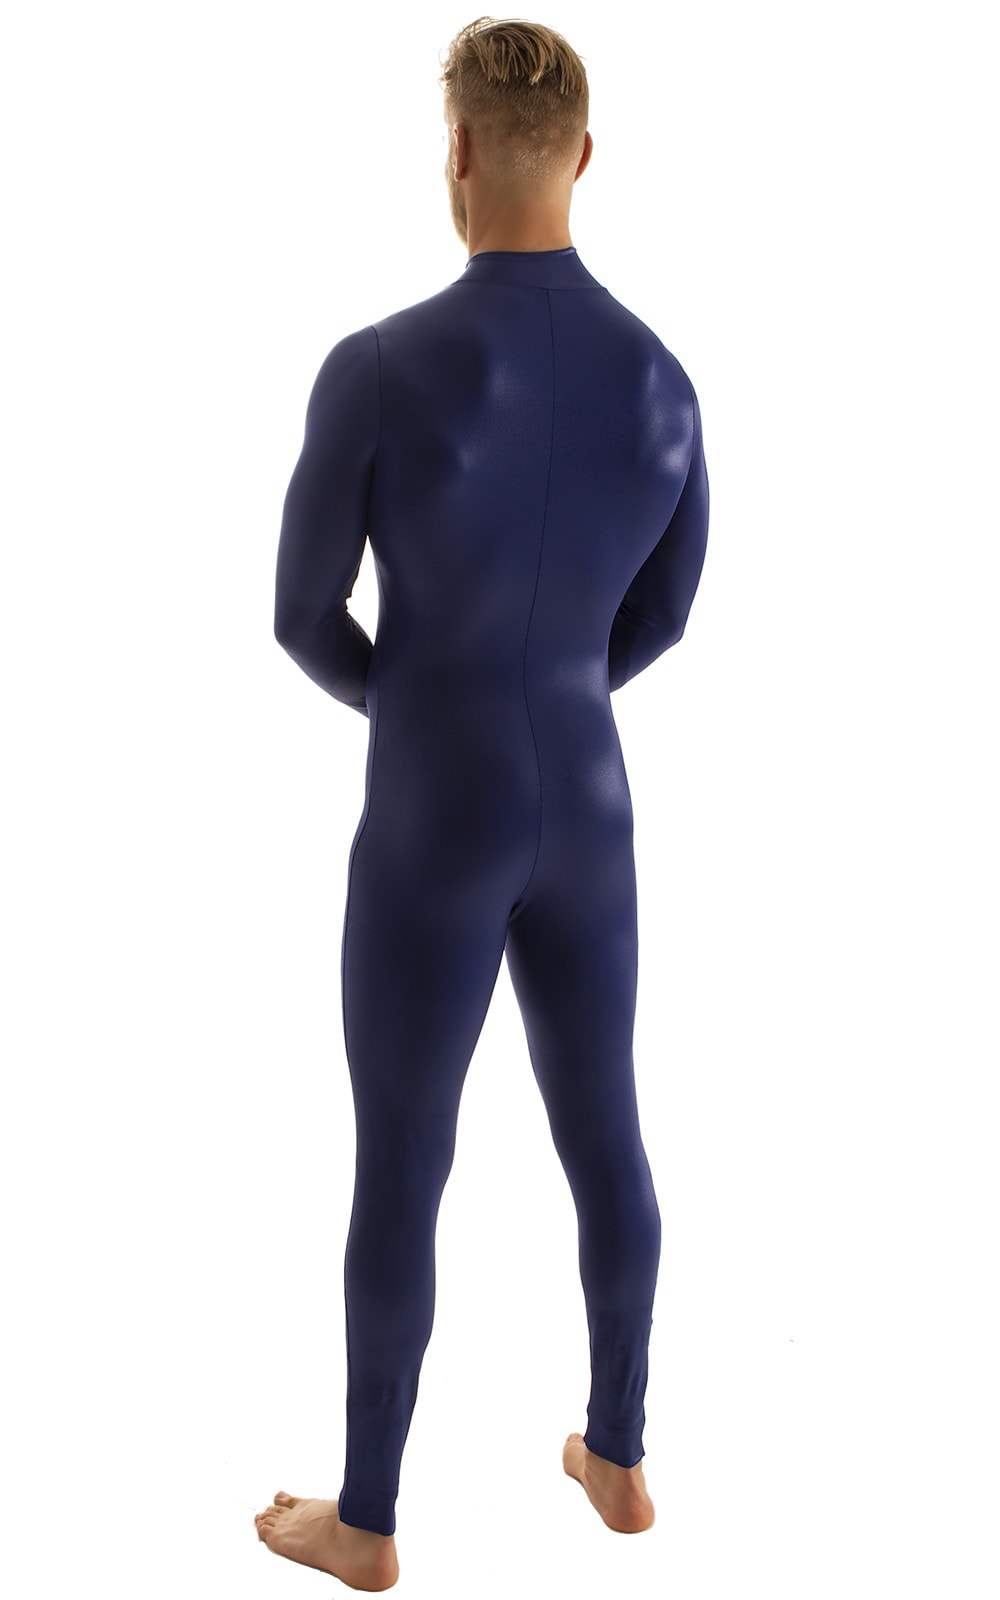 Full Bodysuit Zentai Lycra Spandex Suit for men in Wet Look Navy Blue, Rear Alternative